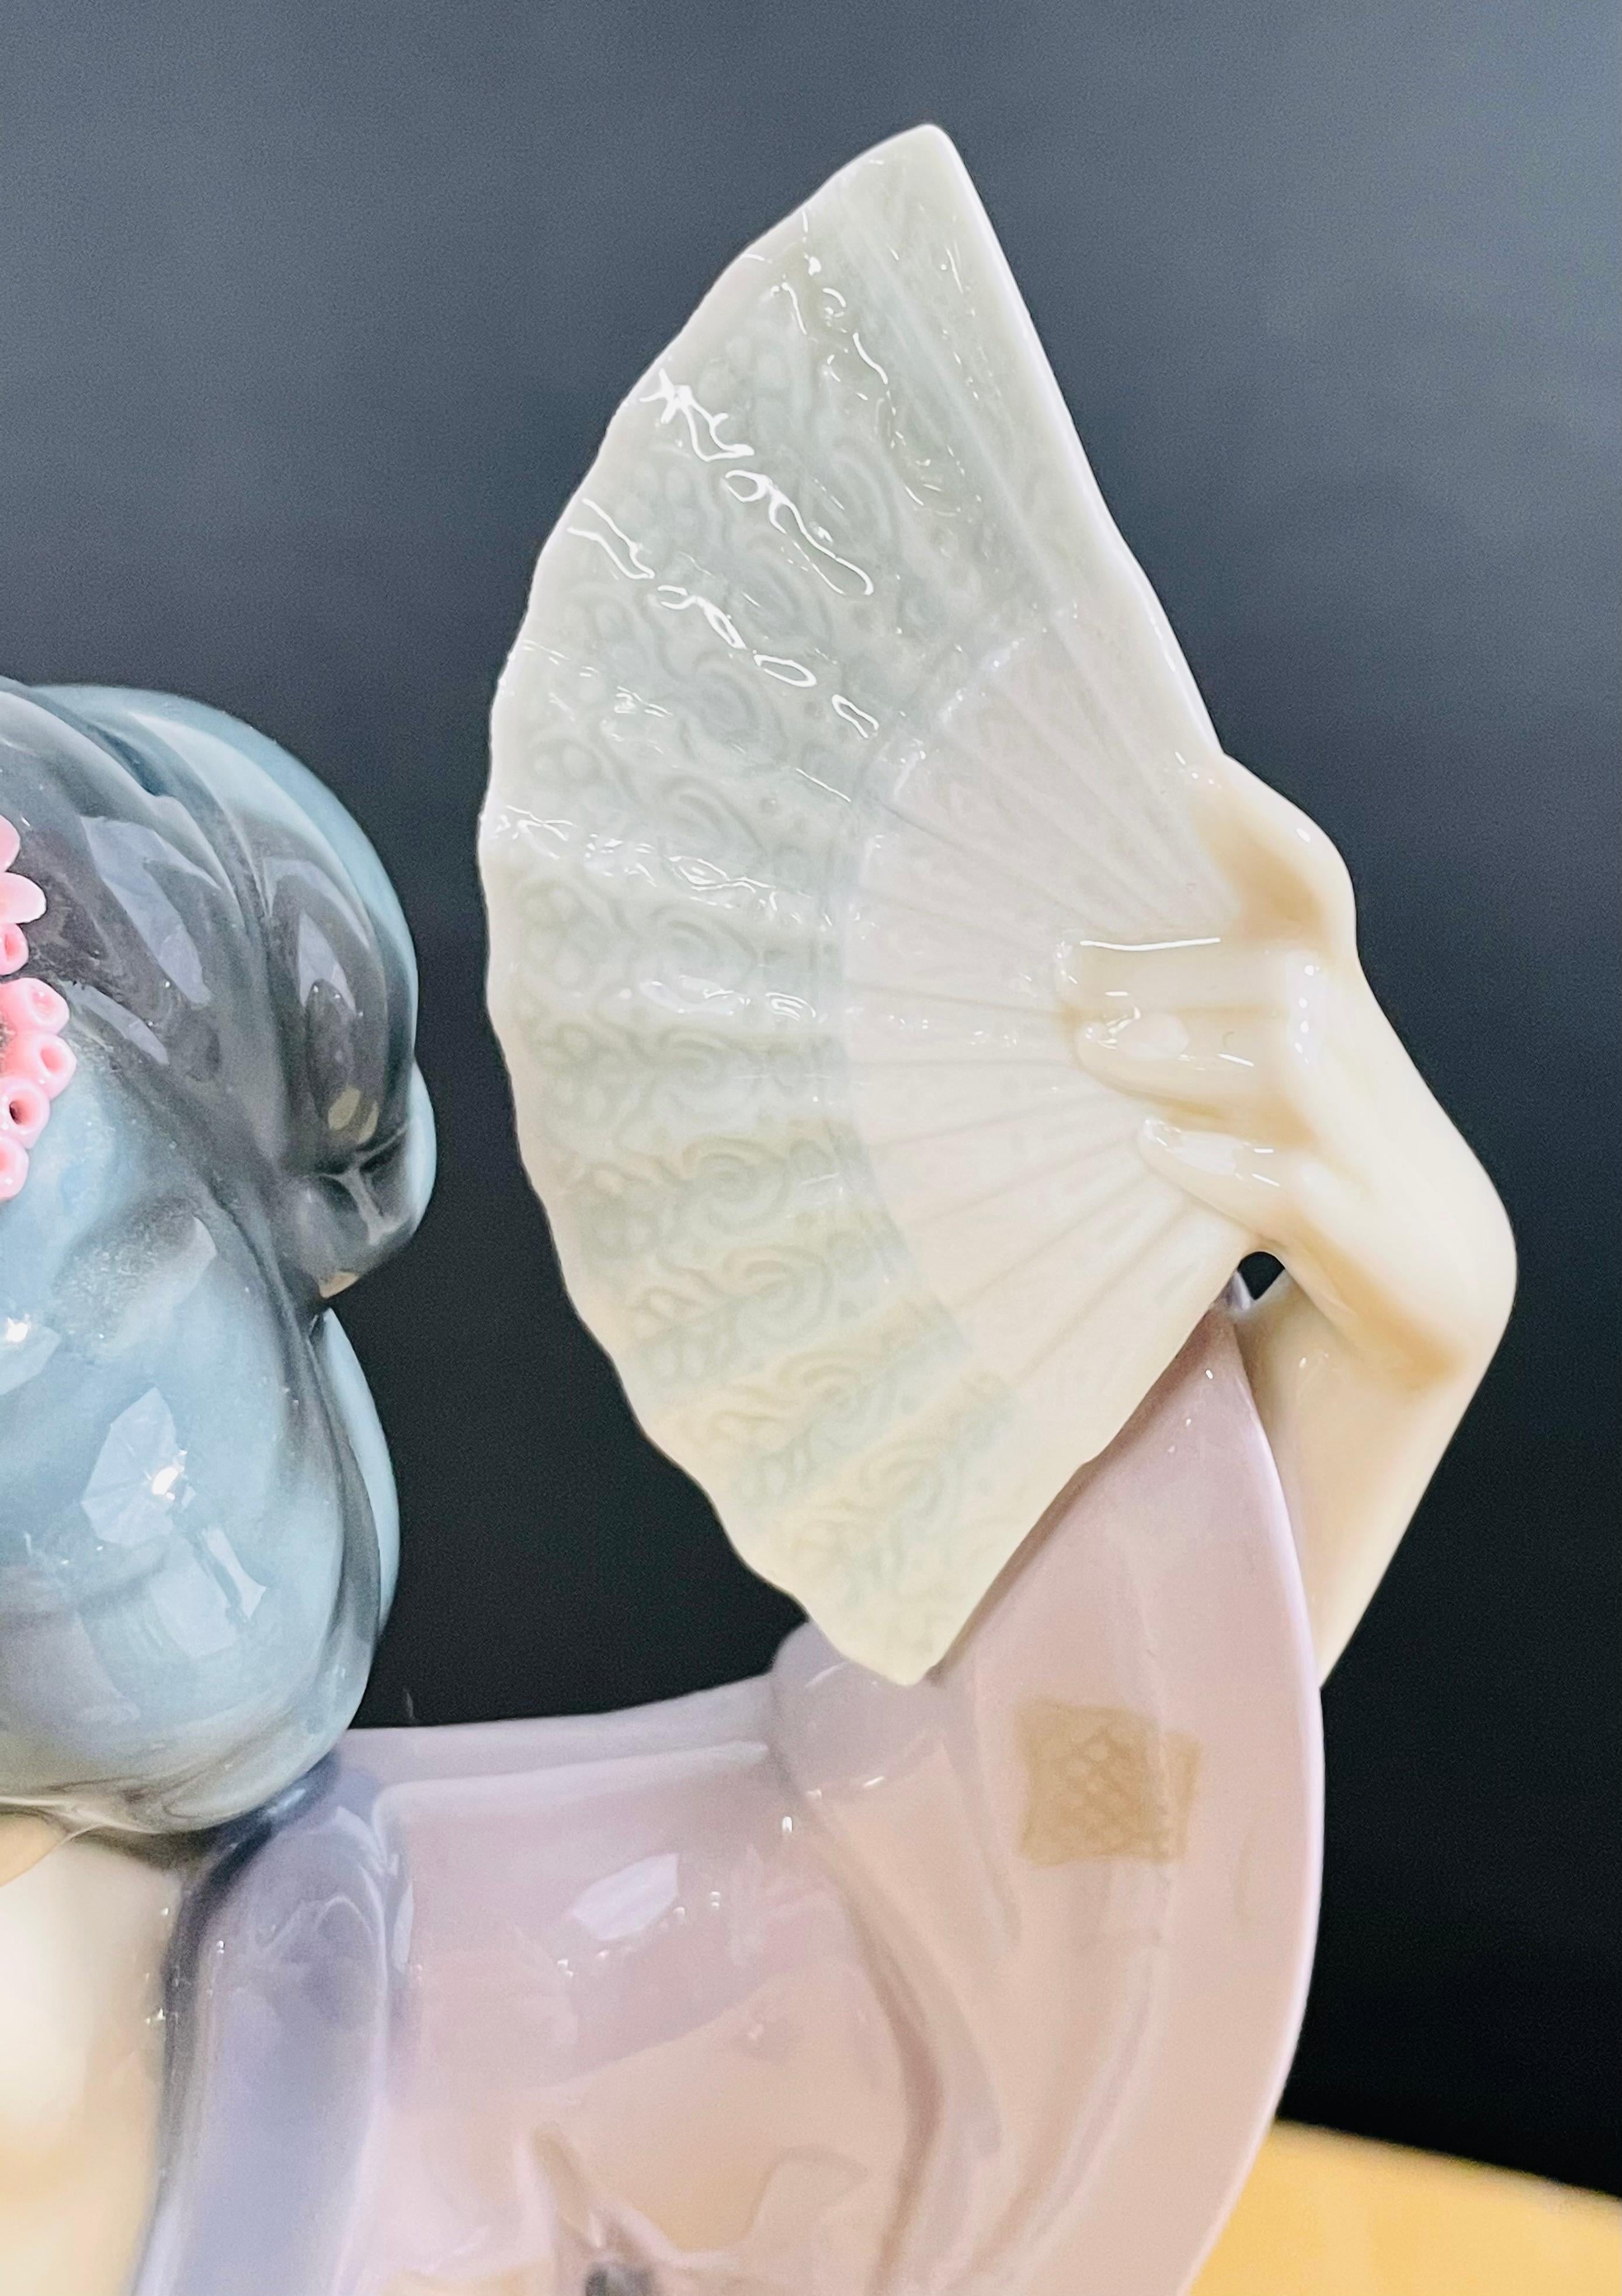 Spanish Llardo Madame Butterfly Japanese Geisha Figurine, Signed and Dated For Sale